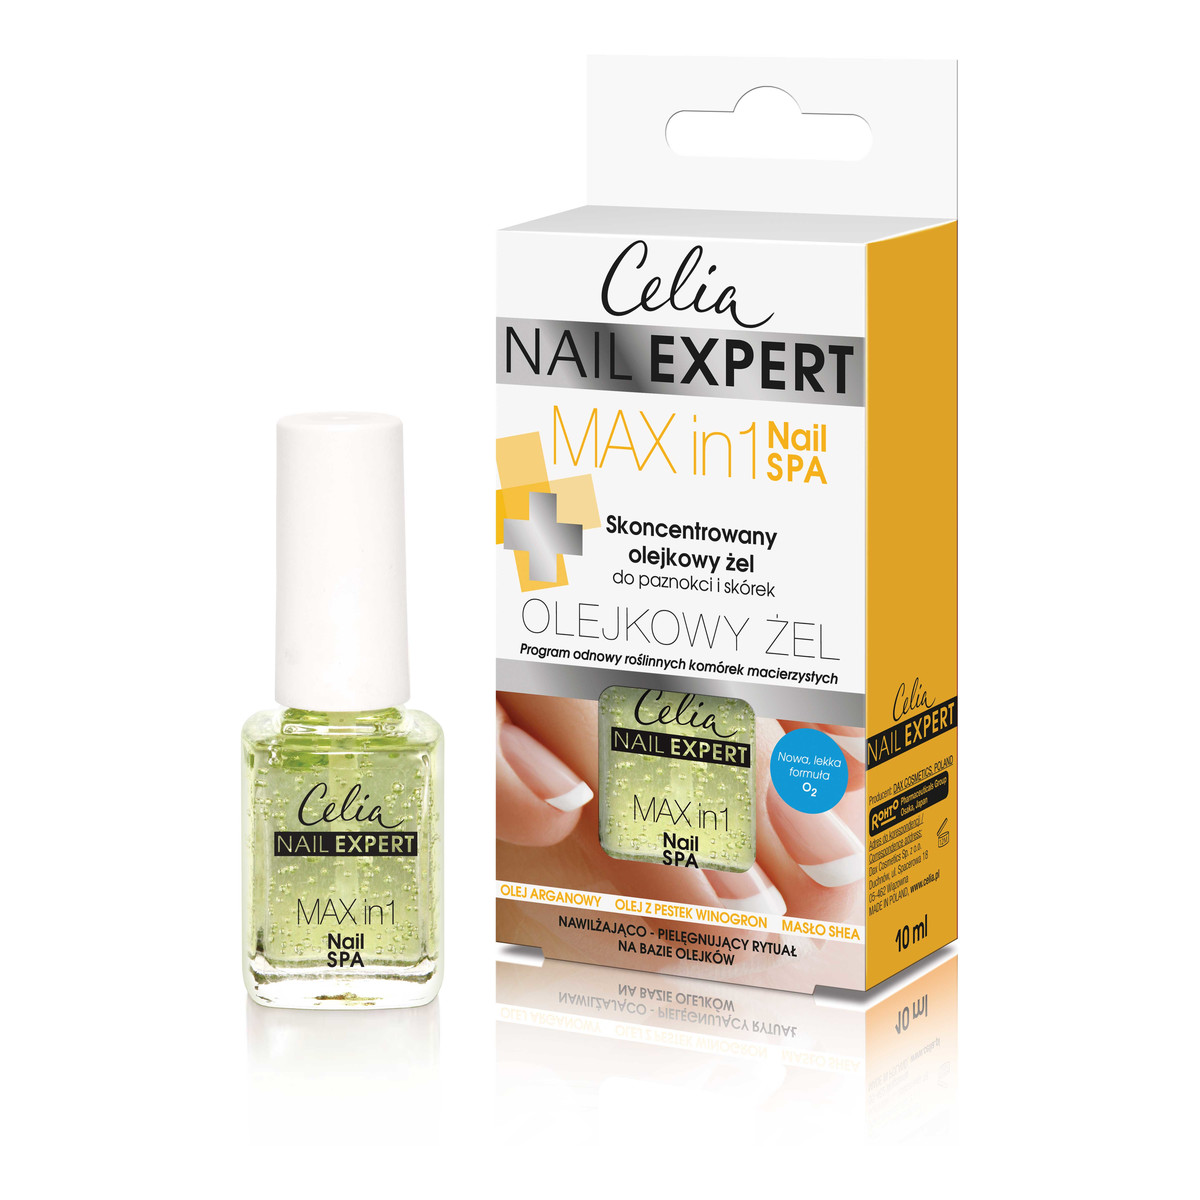 Celia Nail Expert NAIL SPA Skoncentrowany olejkowy żel do paznokci i skórek Max in 1 10ml